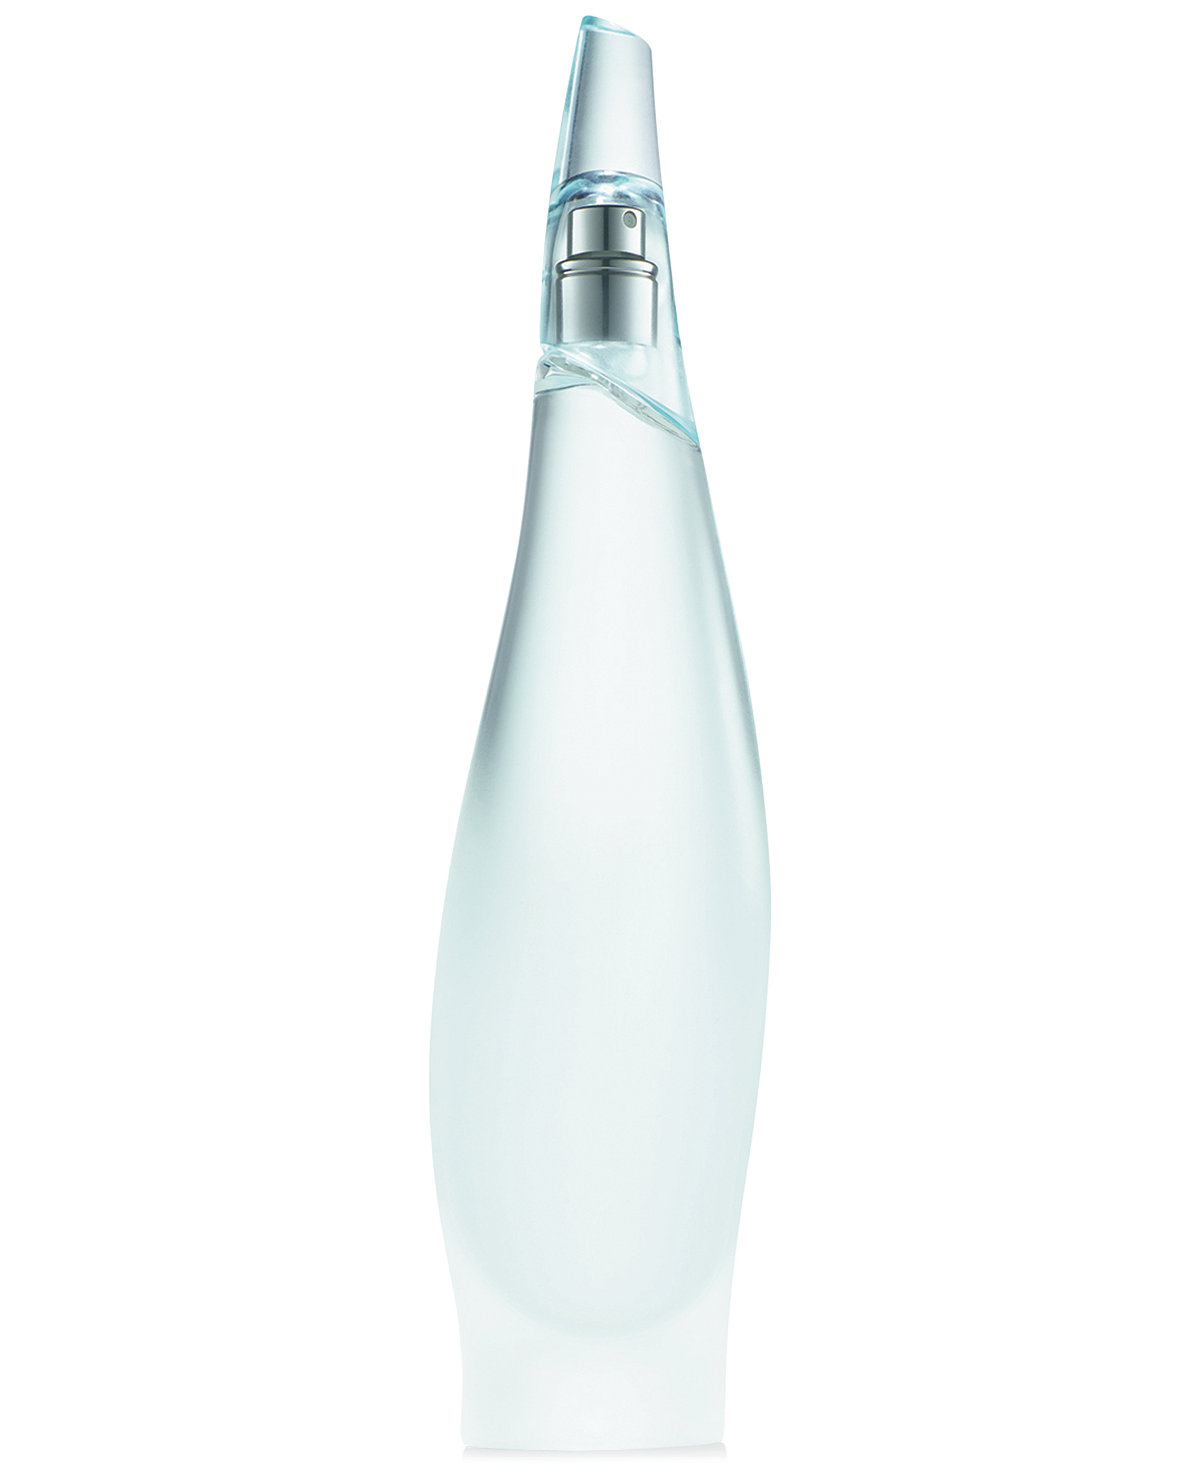 Liquid Cashmere Aqua Donna Karan perfume - a new fragrance for women 2016